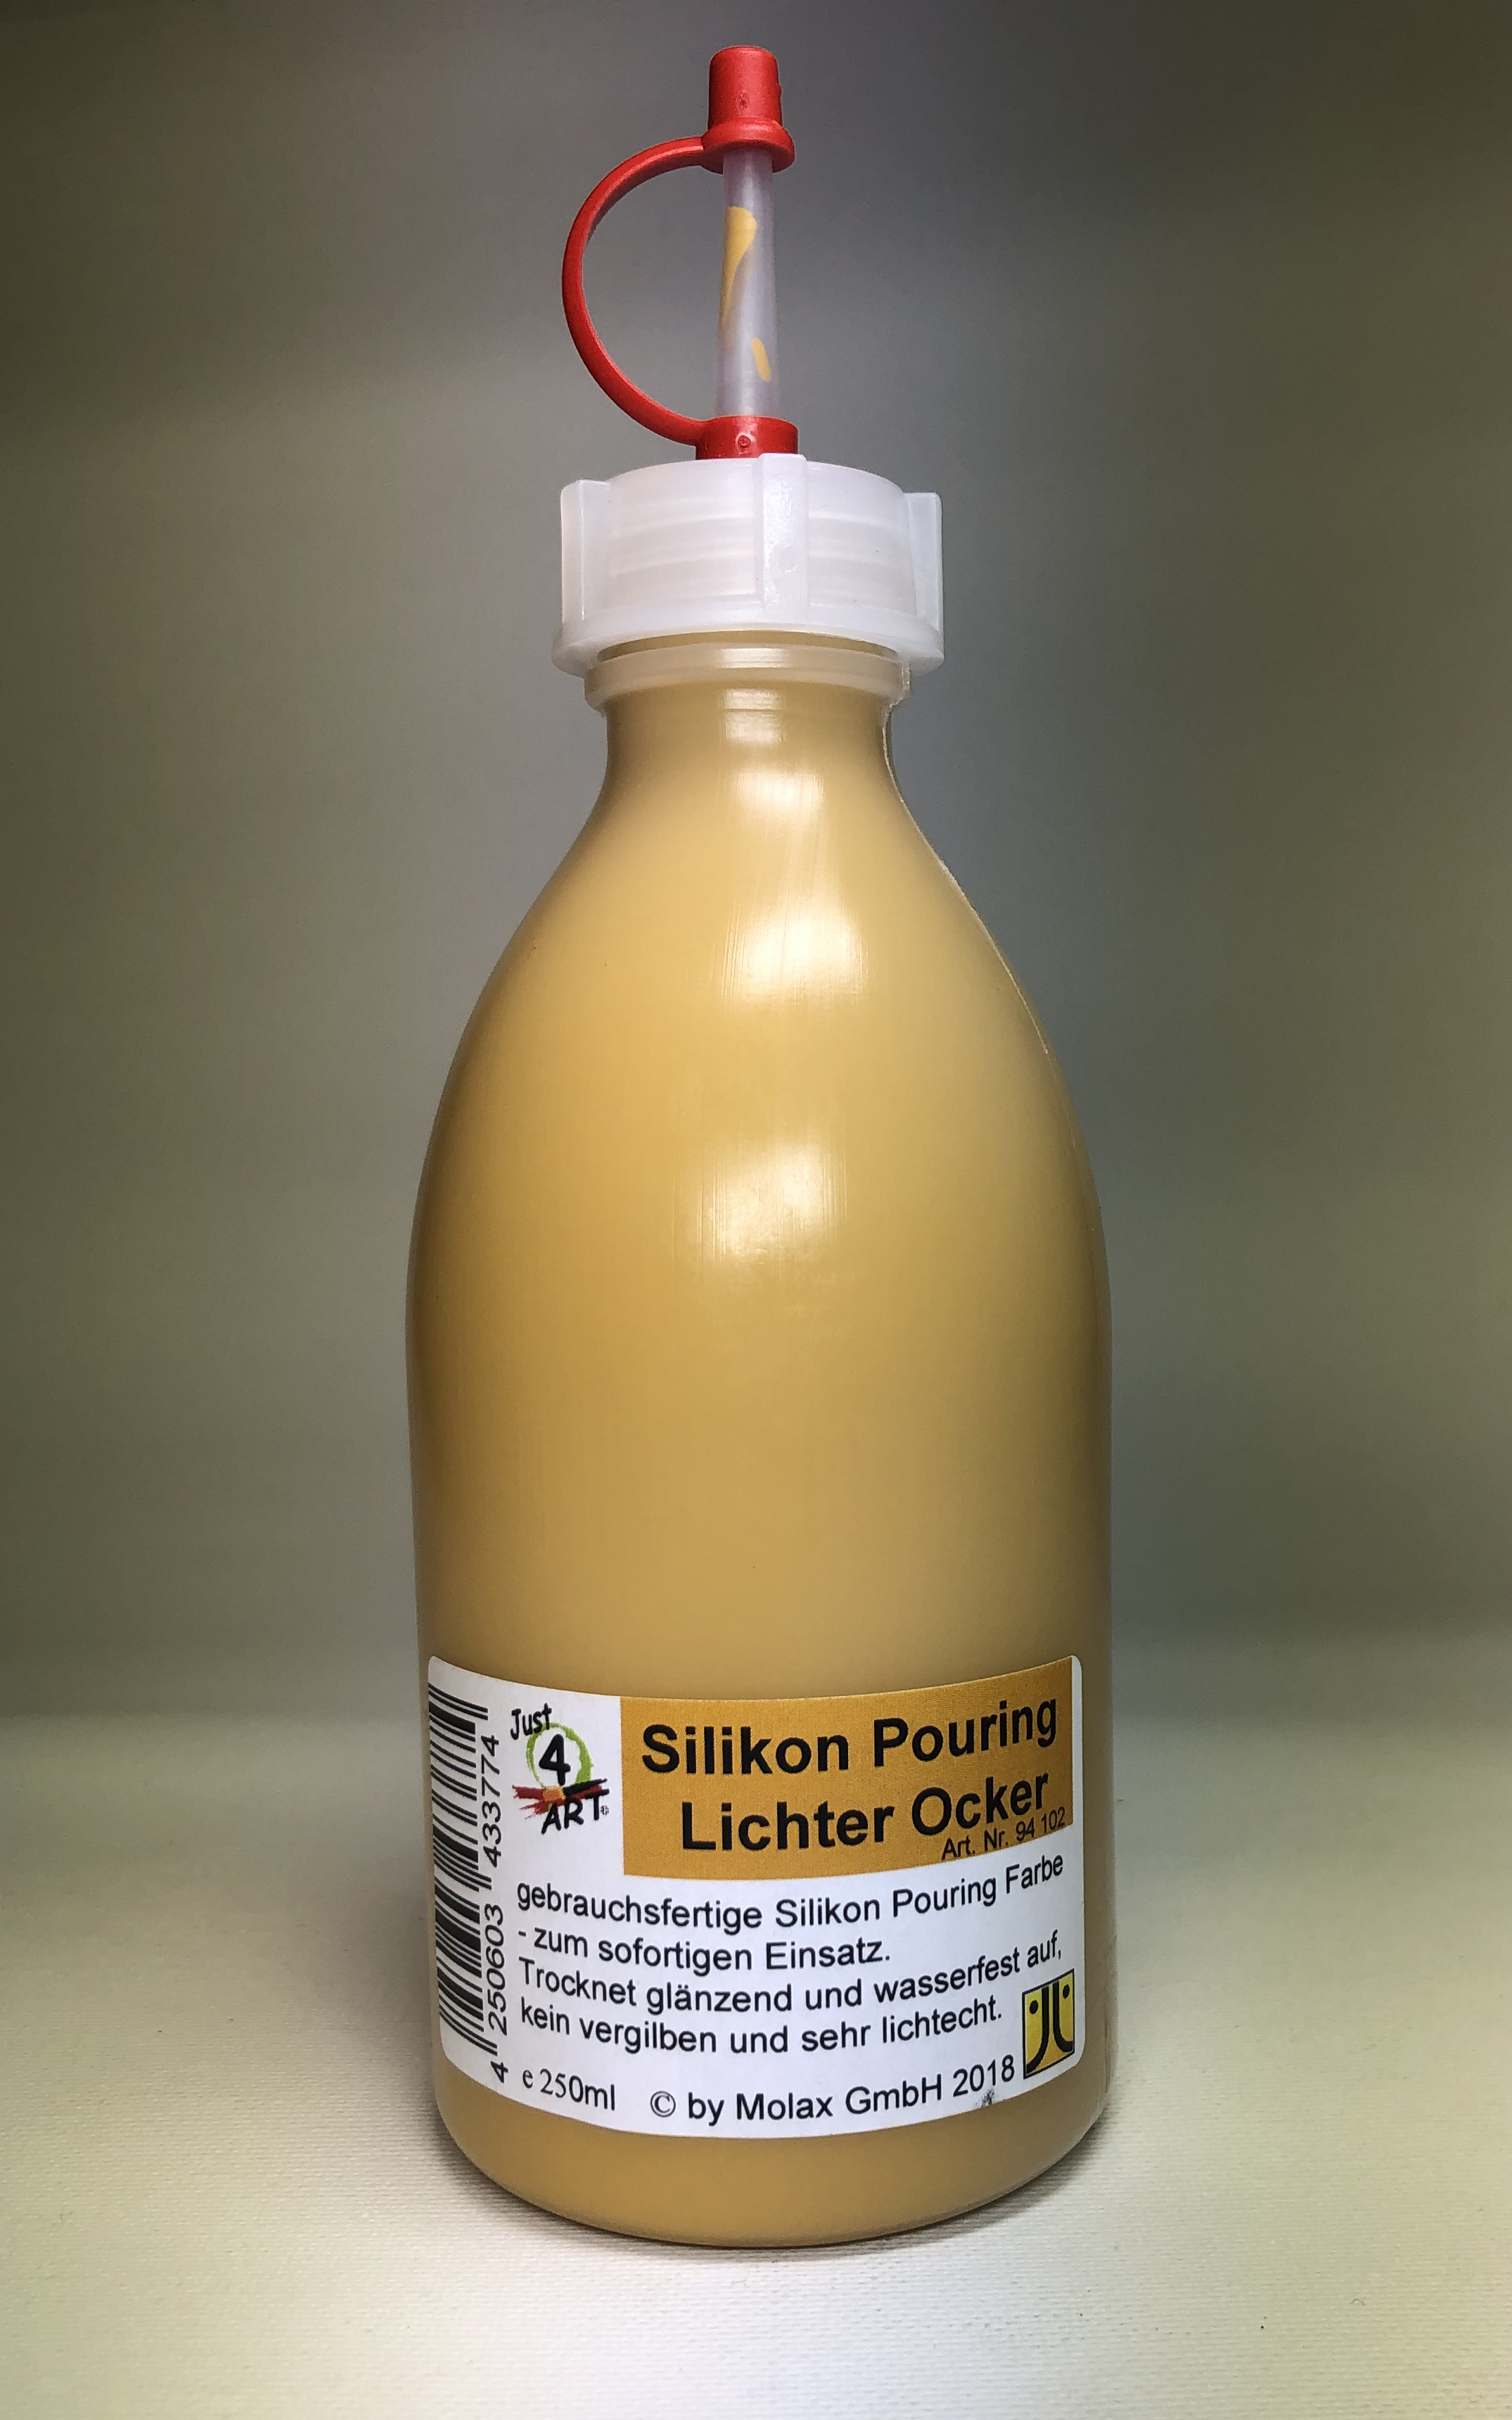 Silicon Pouring 250ml Lichter Ocker